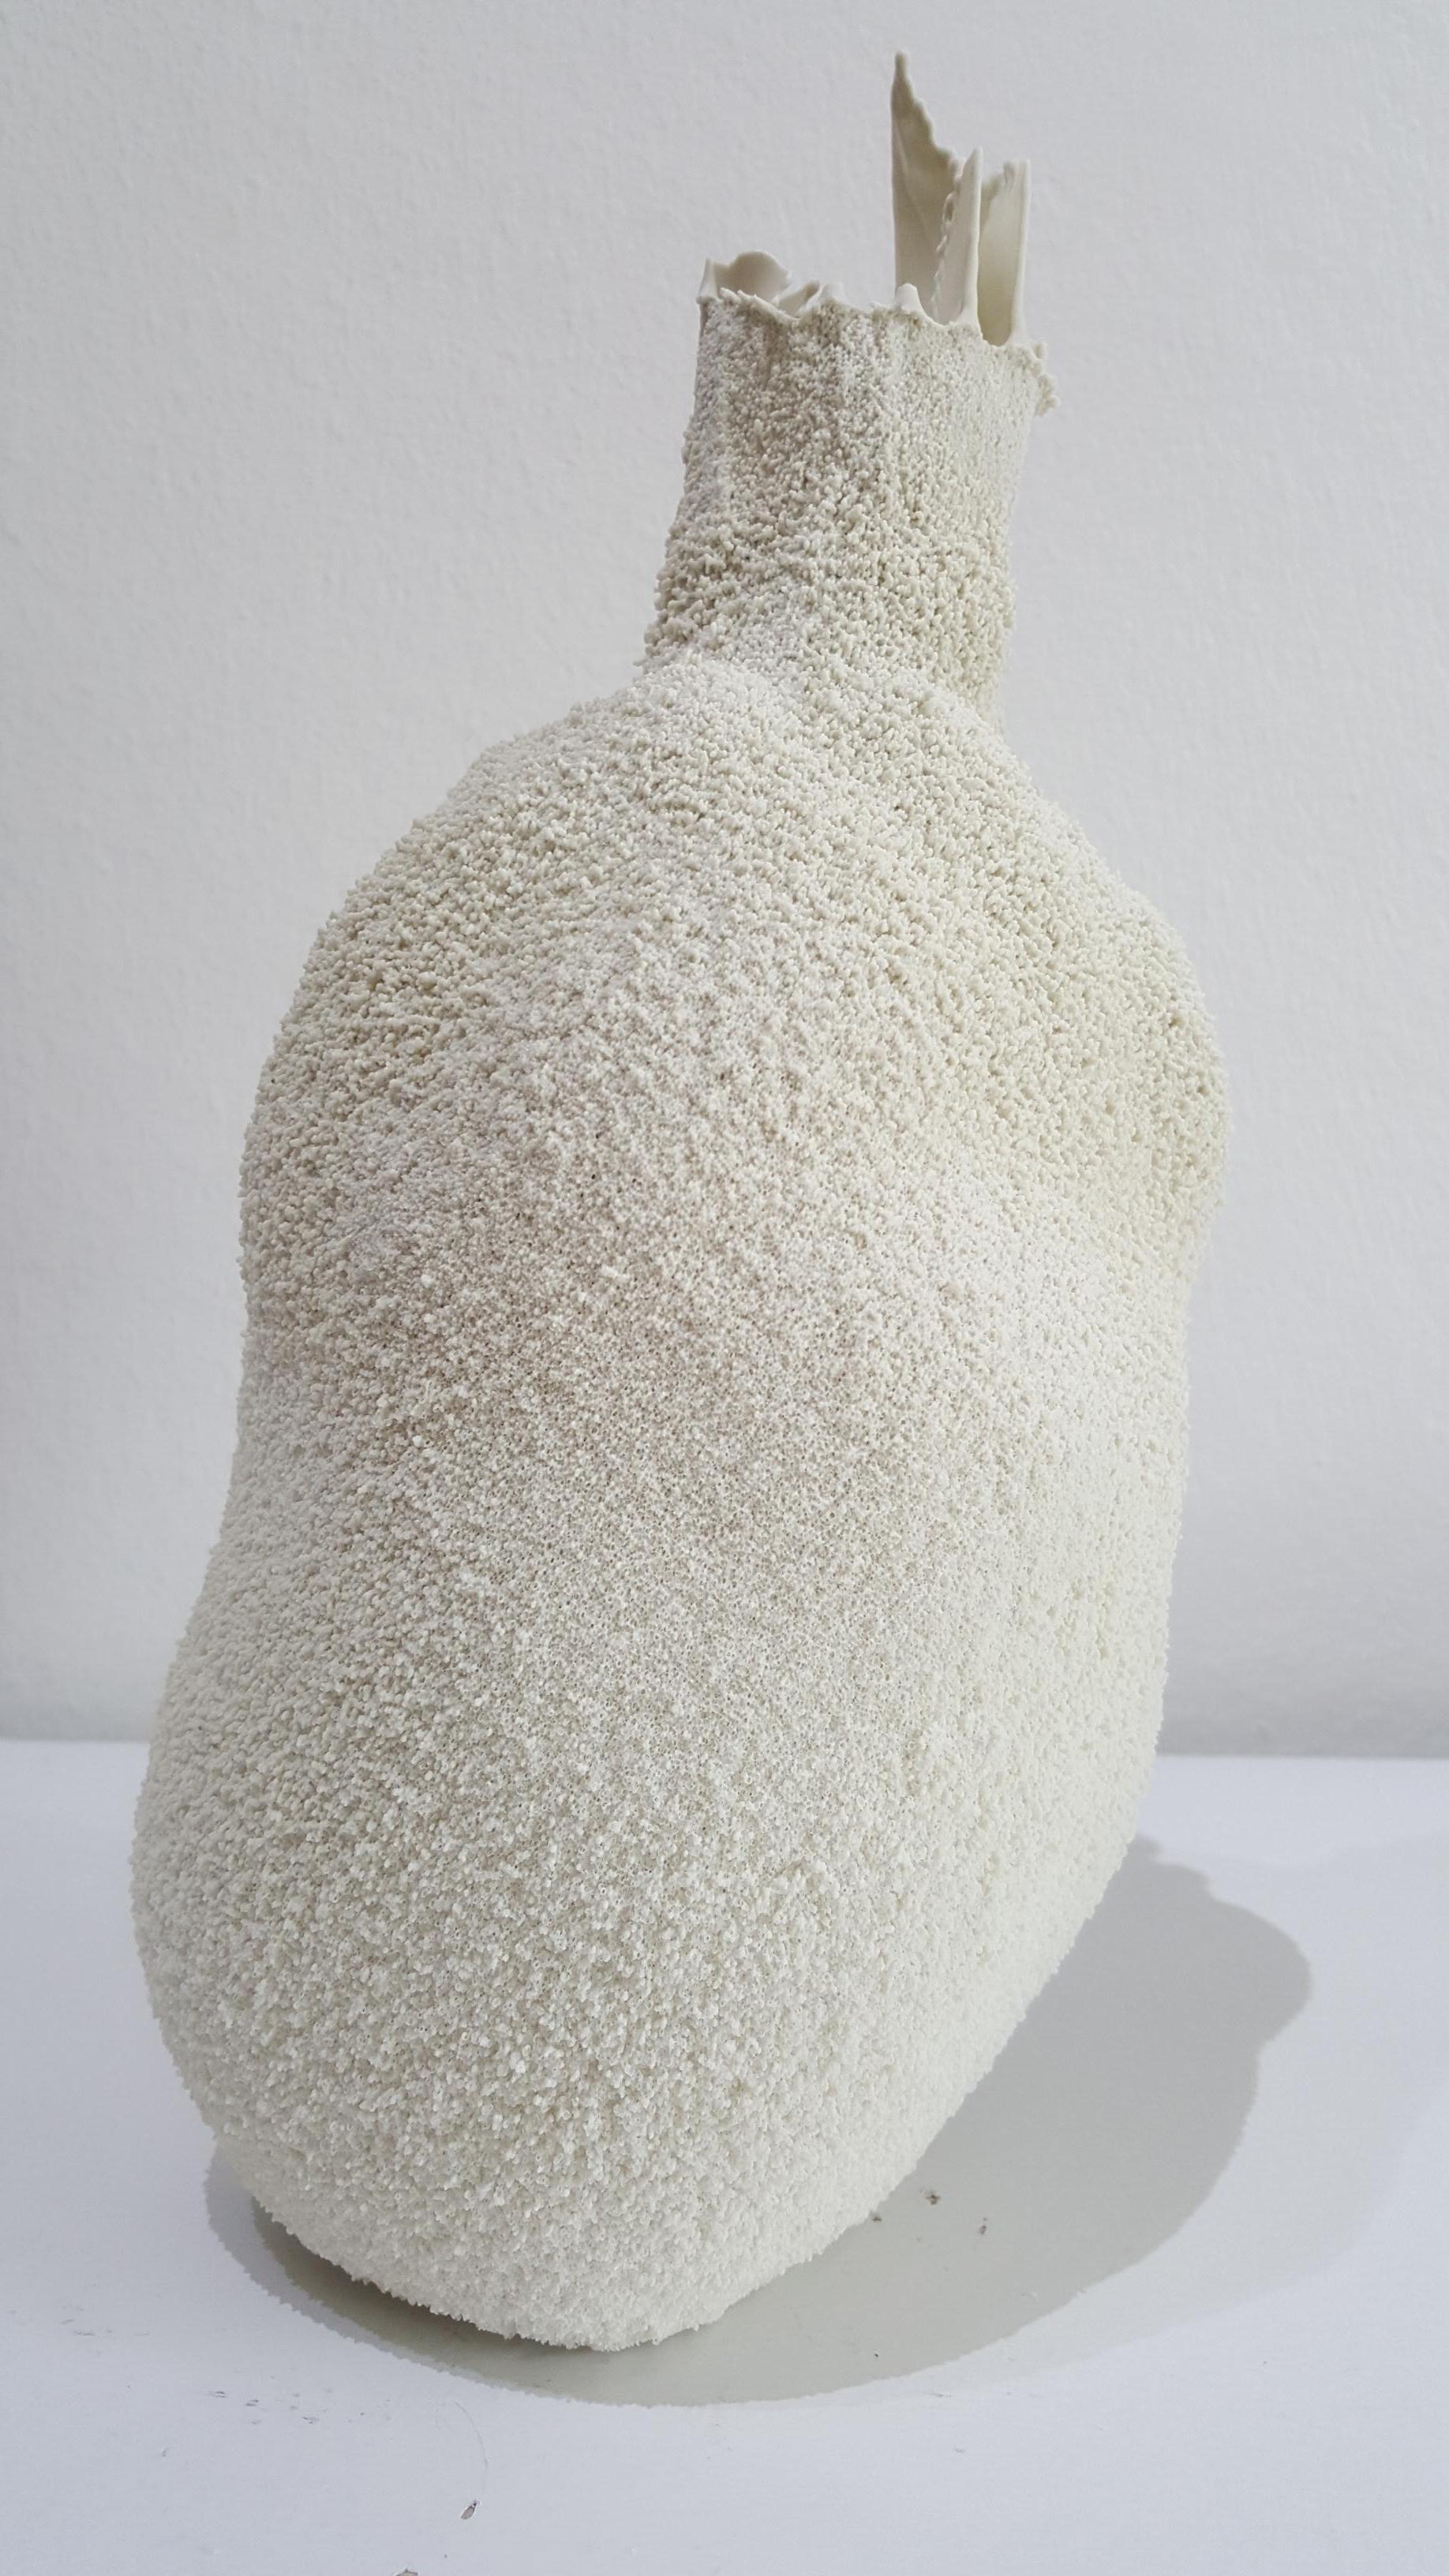 Michal Fargo Abstract Sculpture - White 18 - Porcelain, Ceramics, Nature theme, Free Form